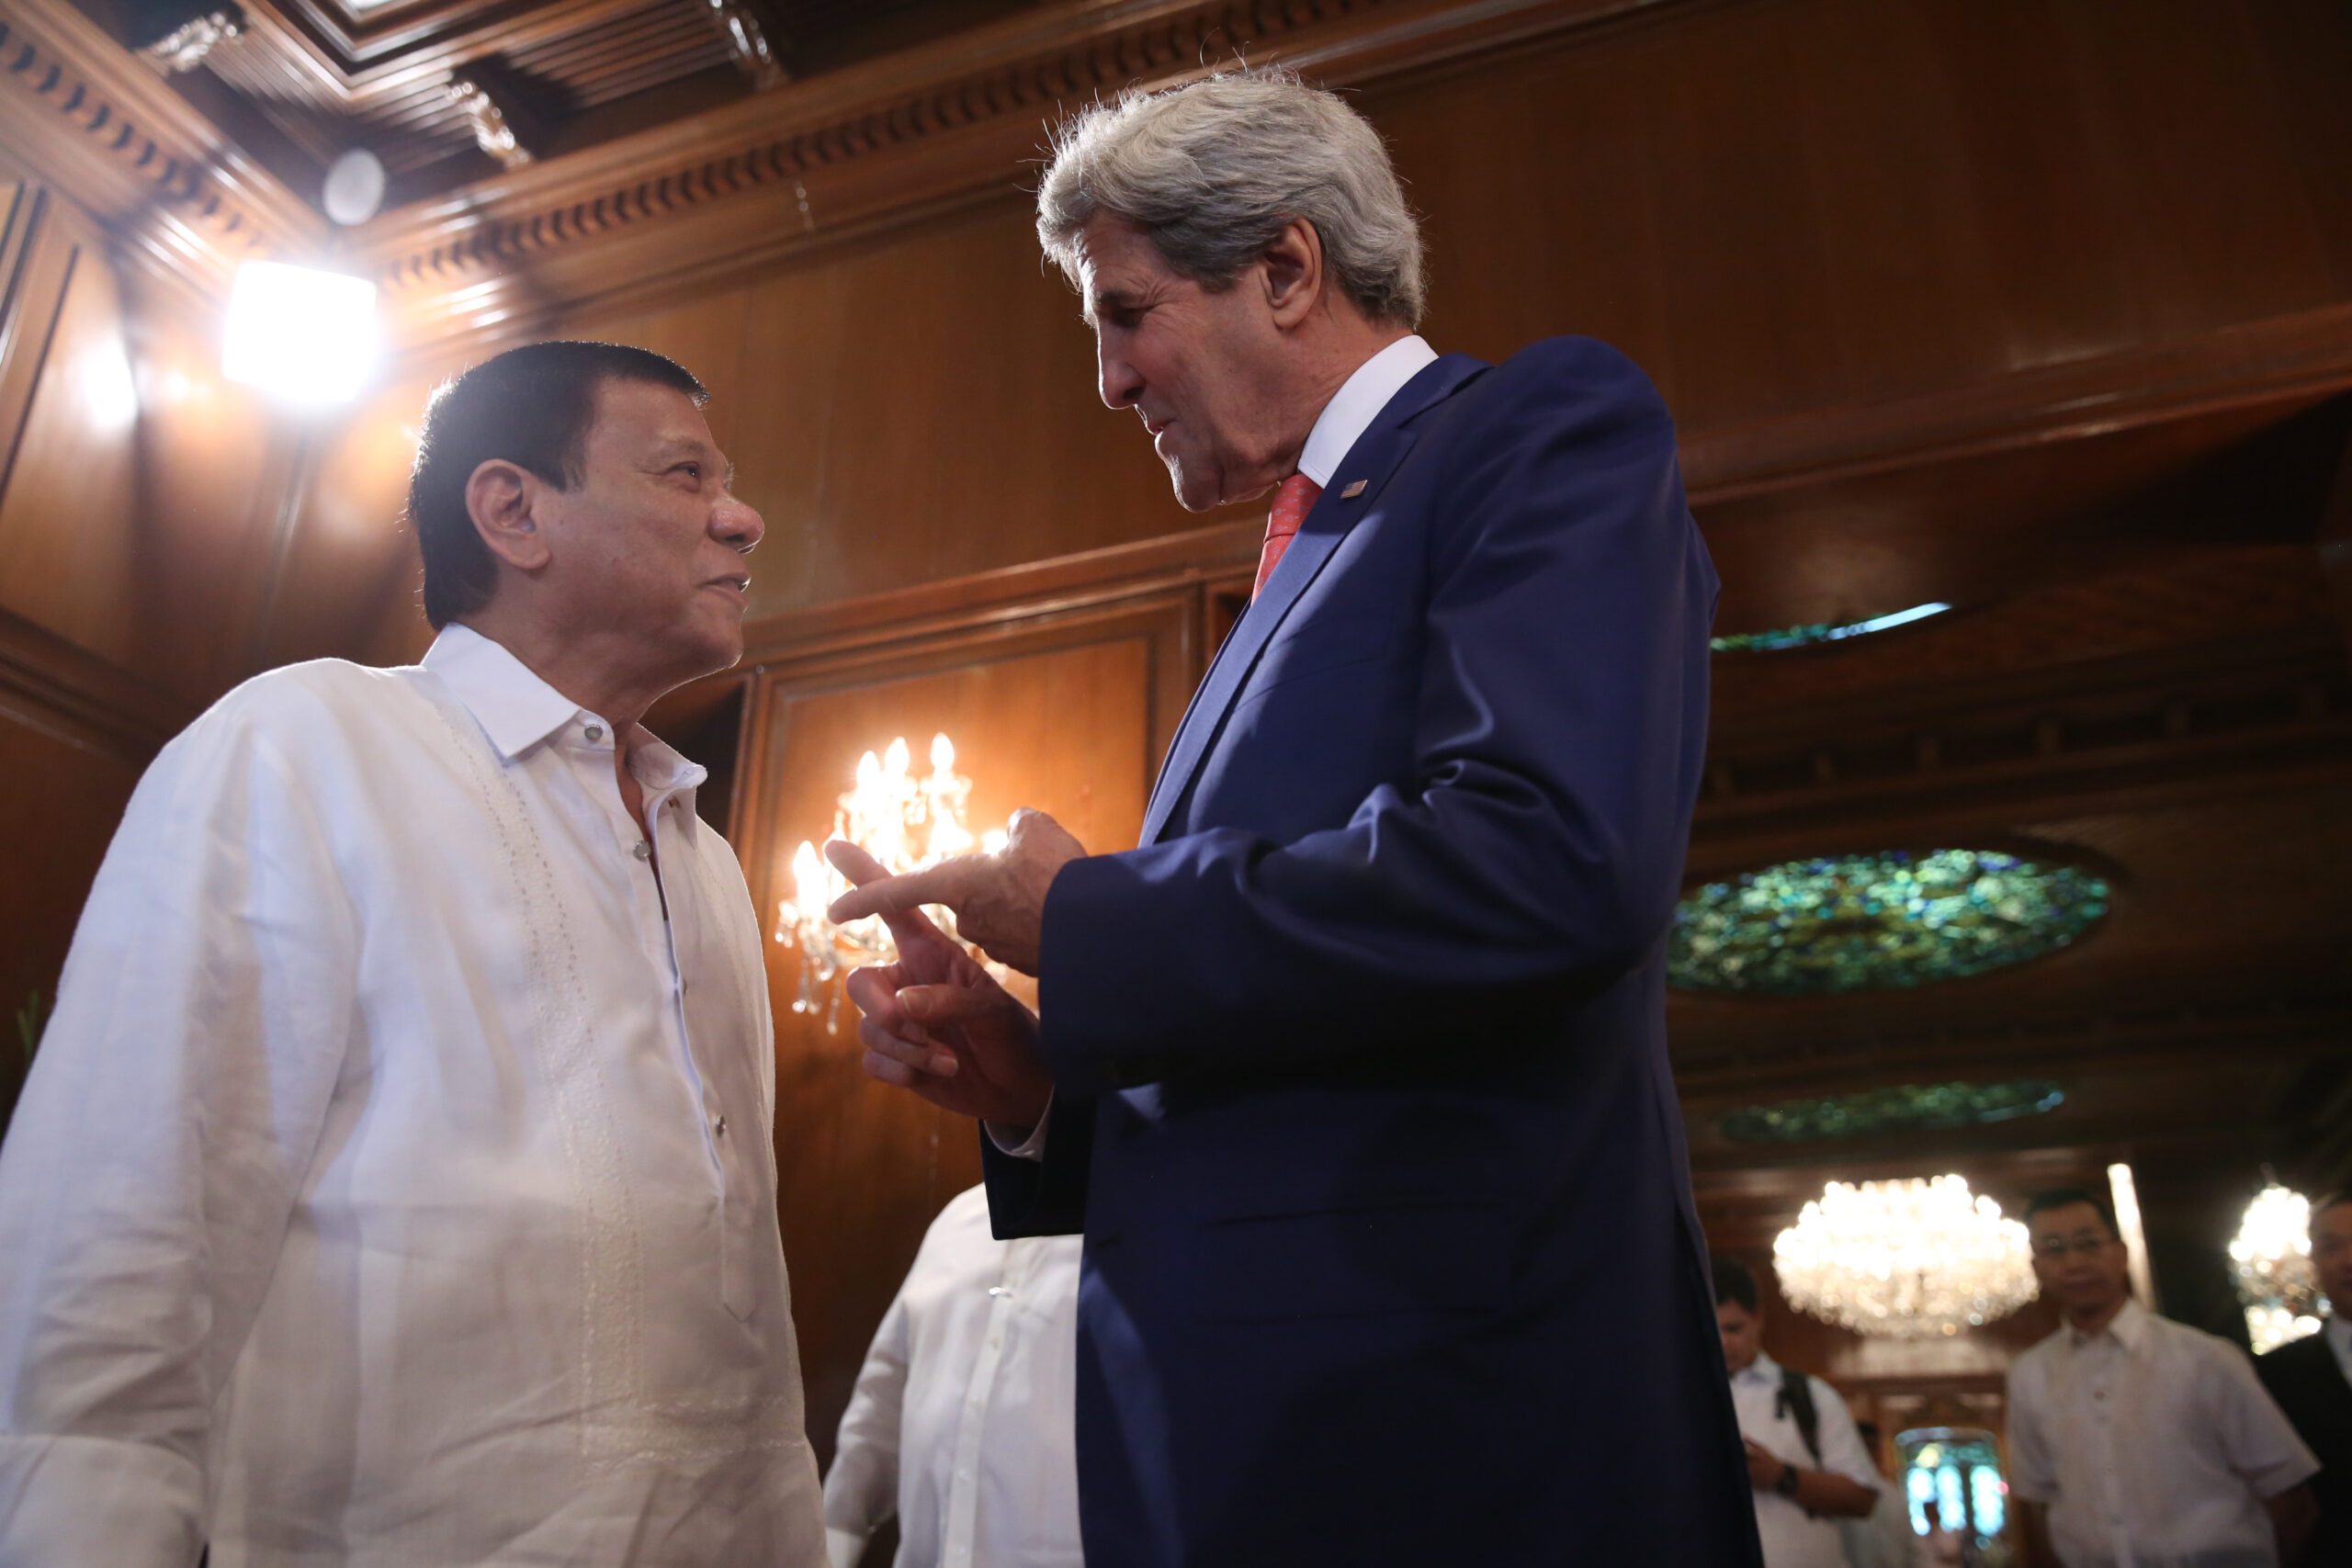 Kerry and Duterte discuss Paris climate agreement